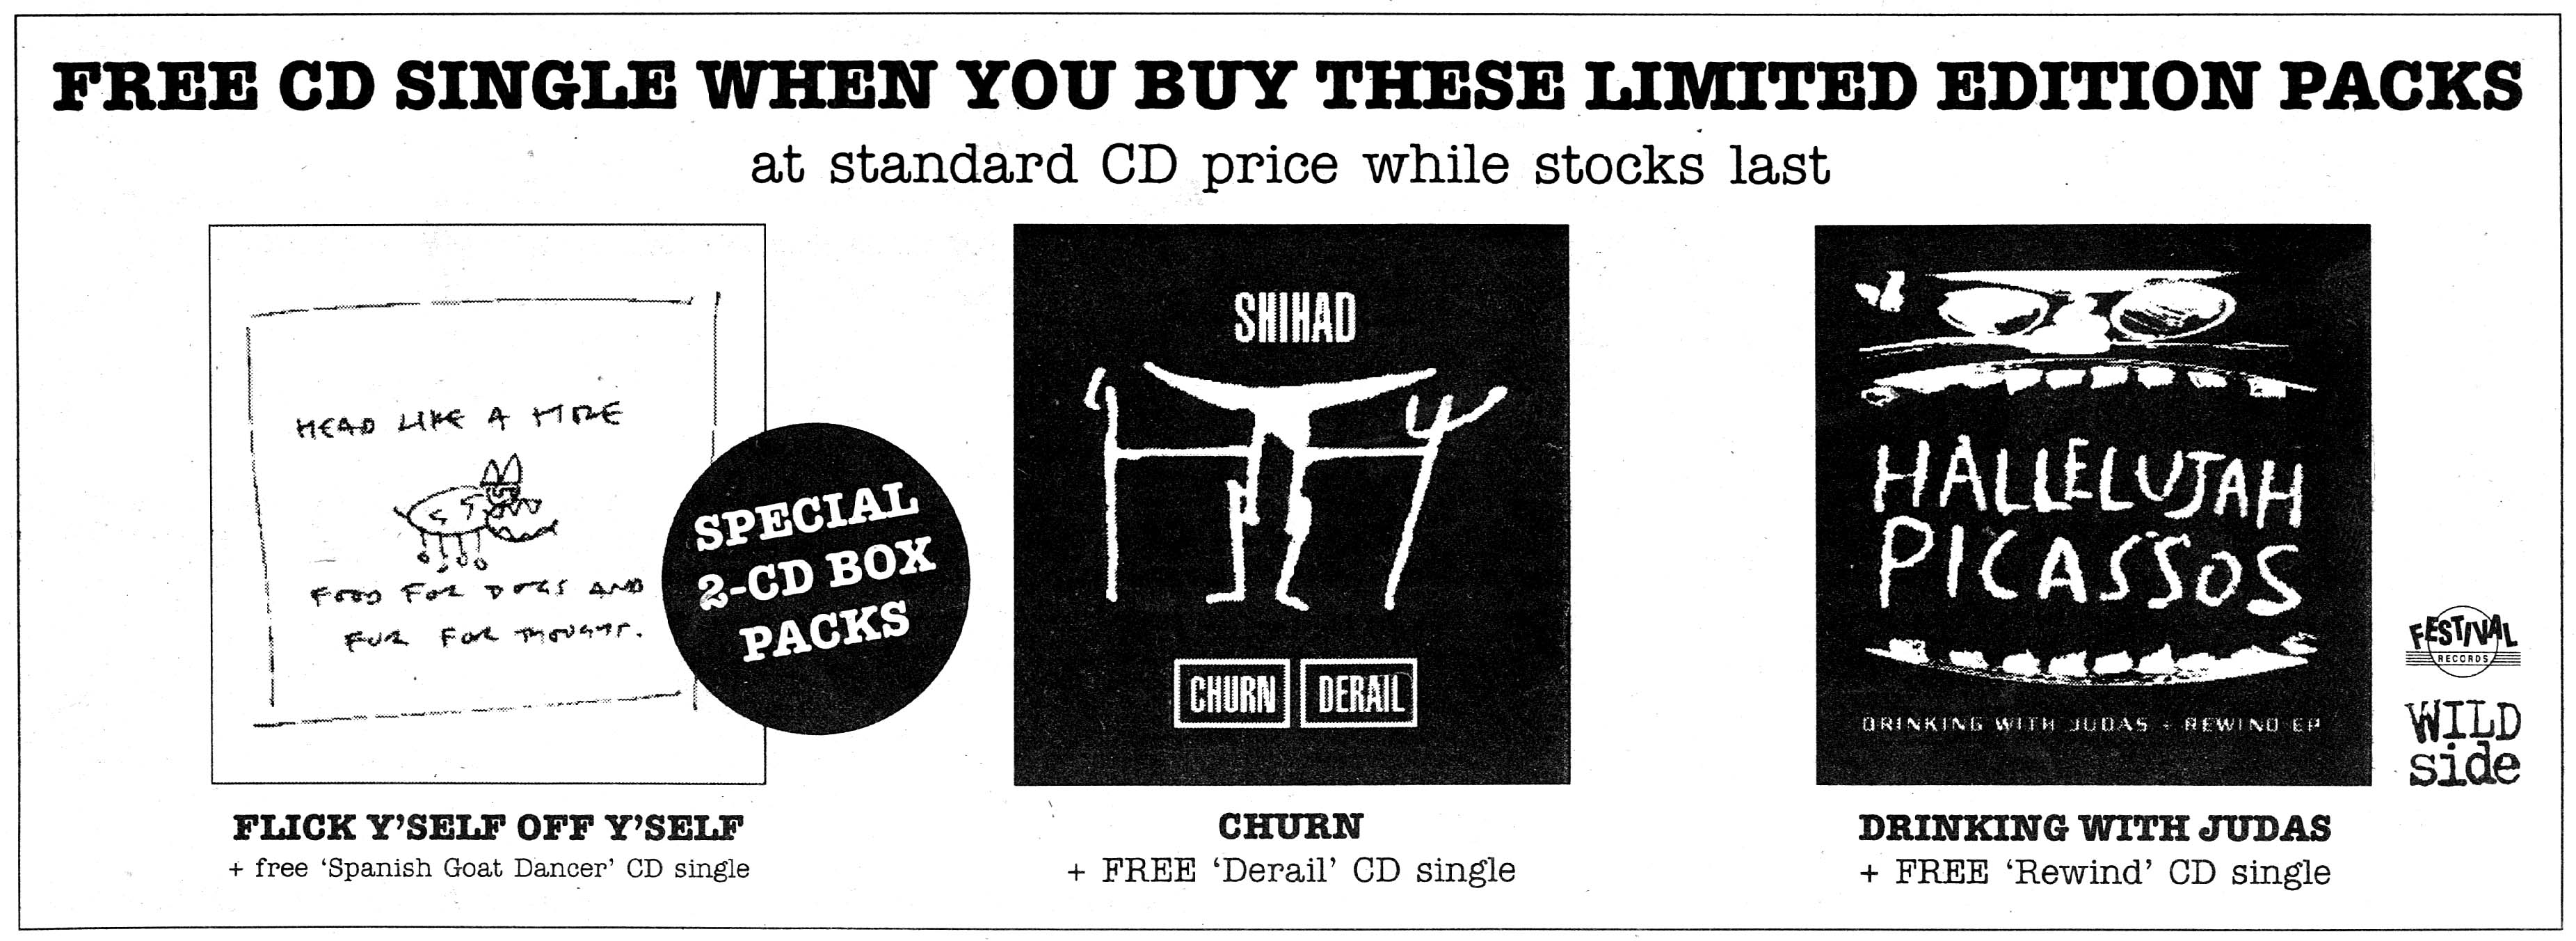 Churn Derail Limited Edition Pack Ad.jpg